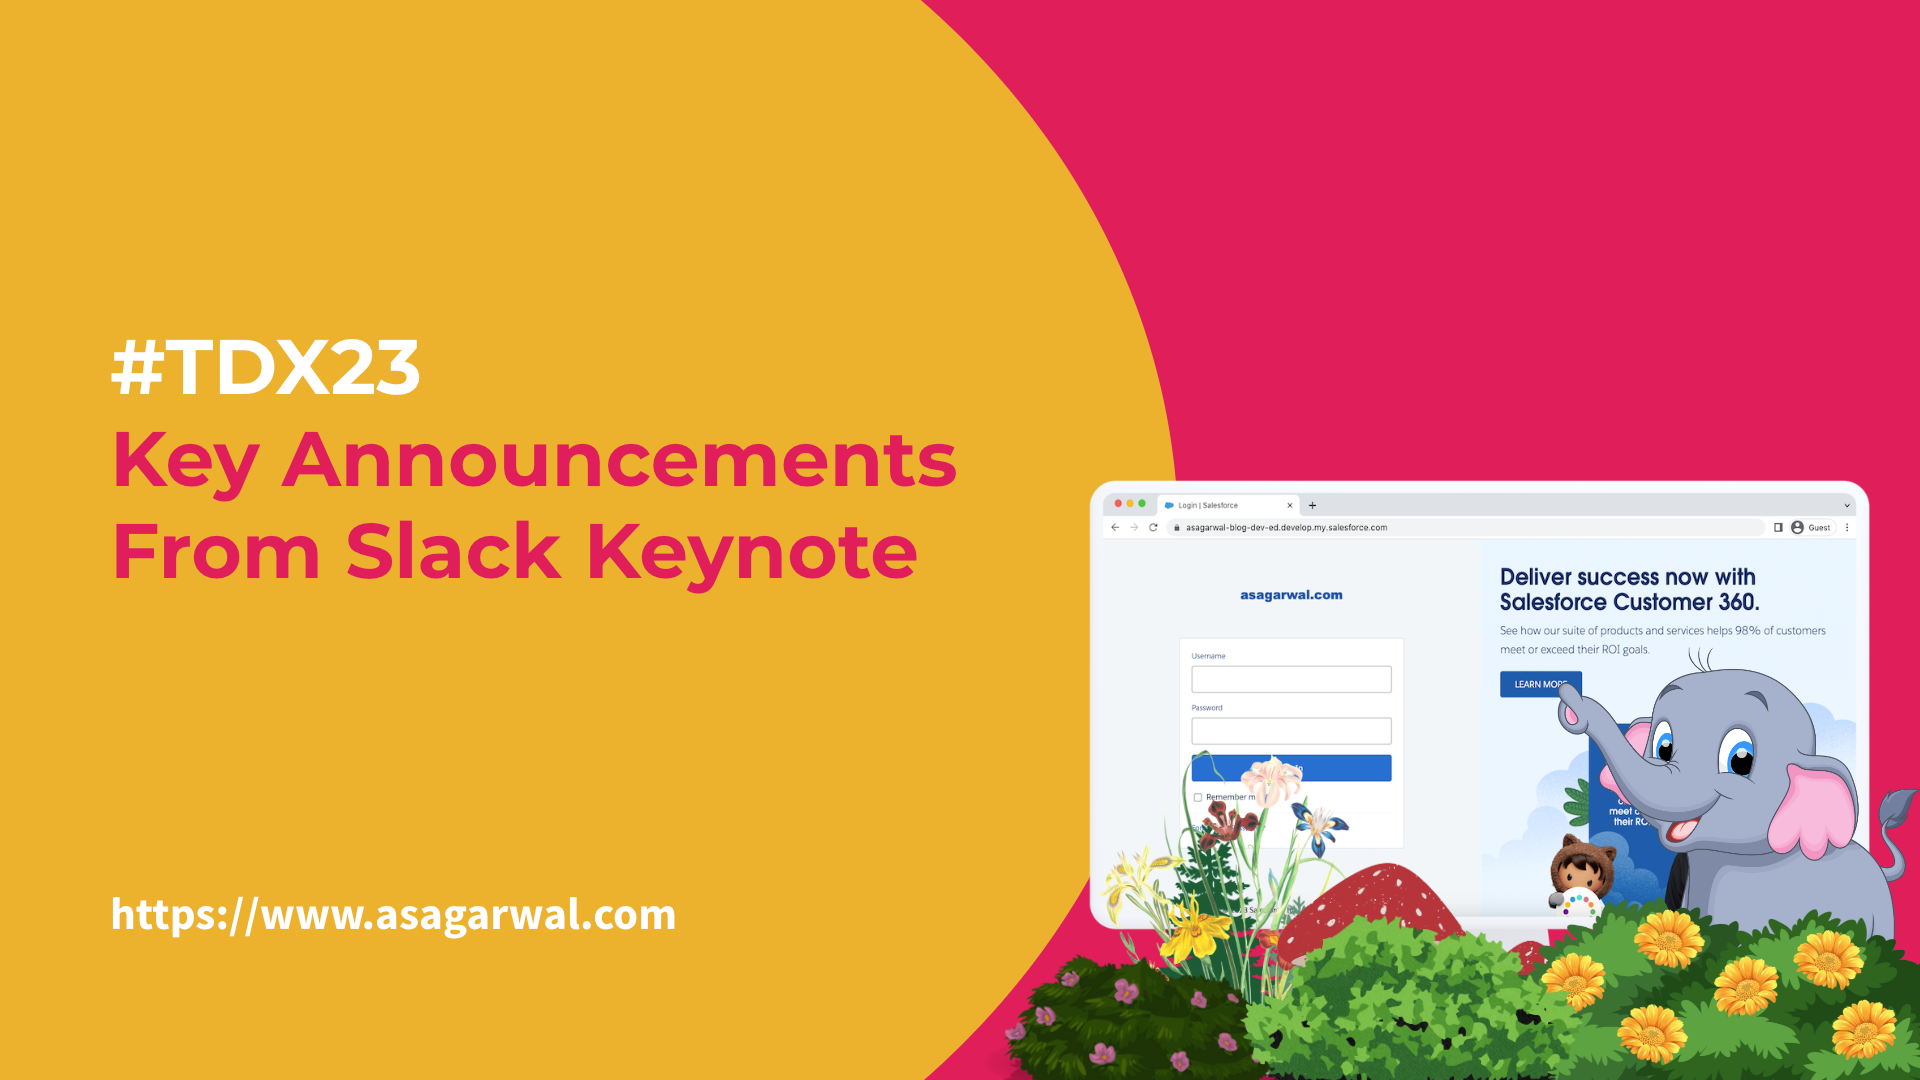 #TDX23 - Key Announcements From Slack Keynote